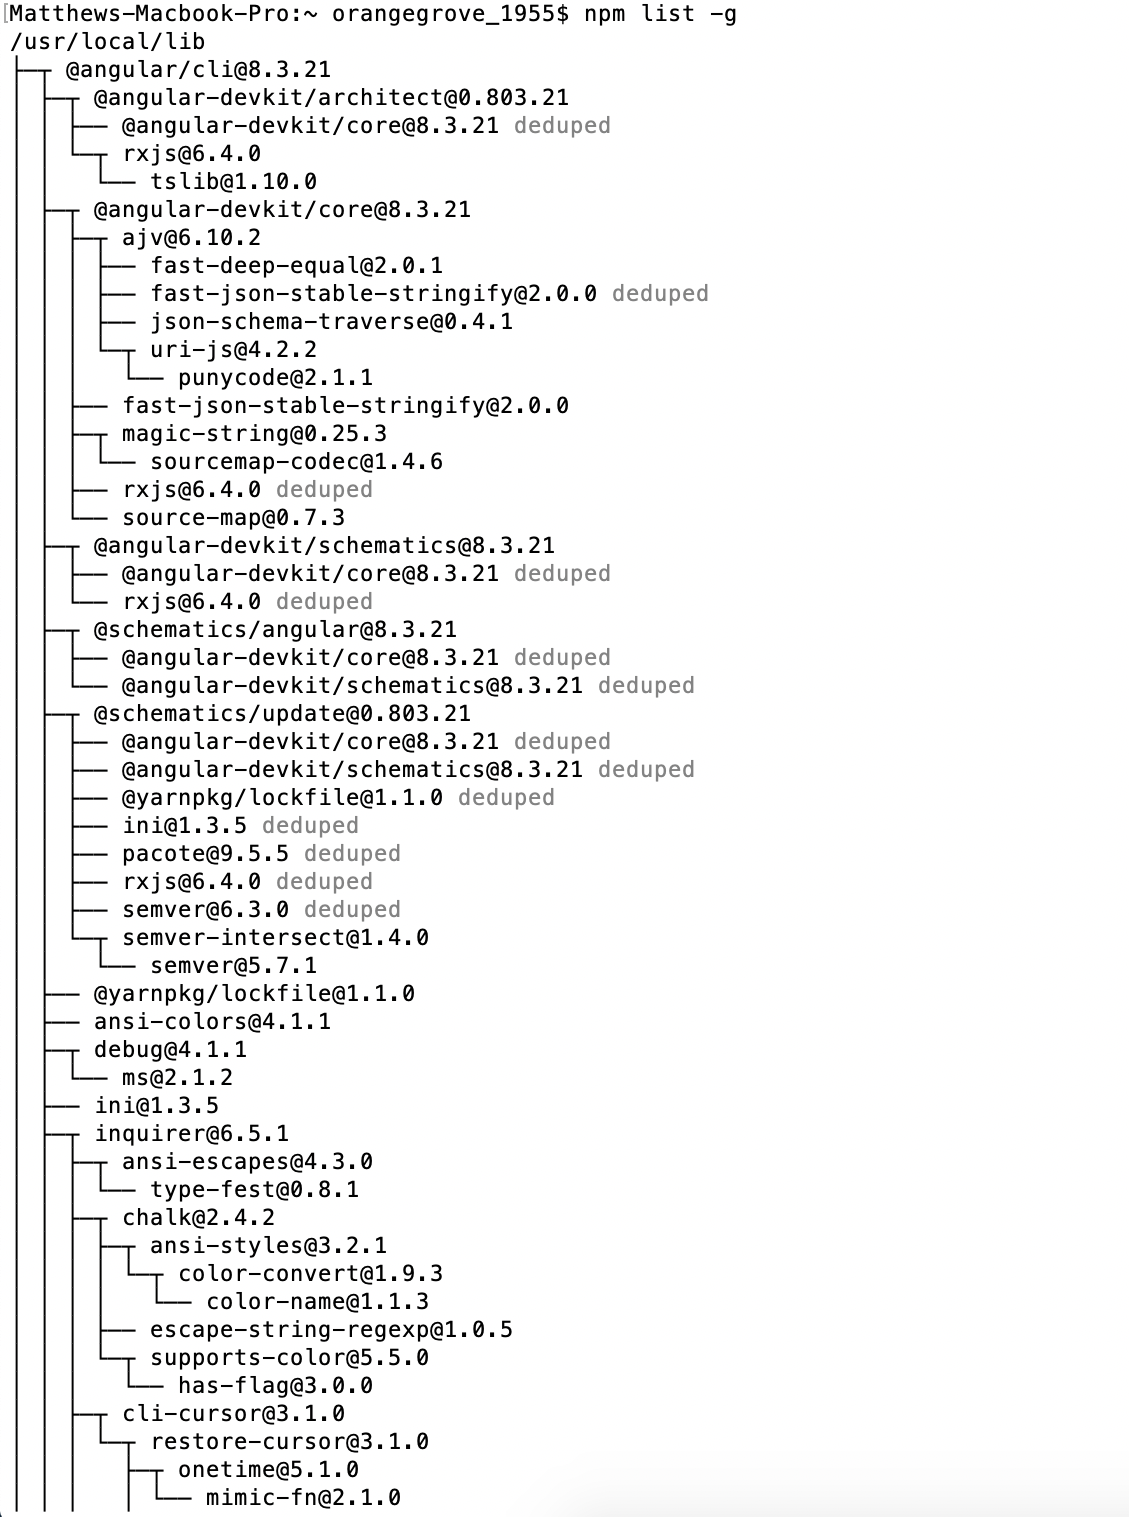 Output of npm list -g command